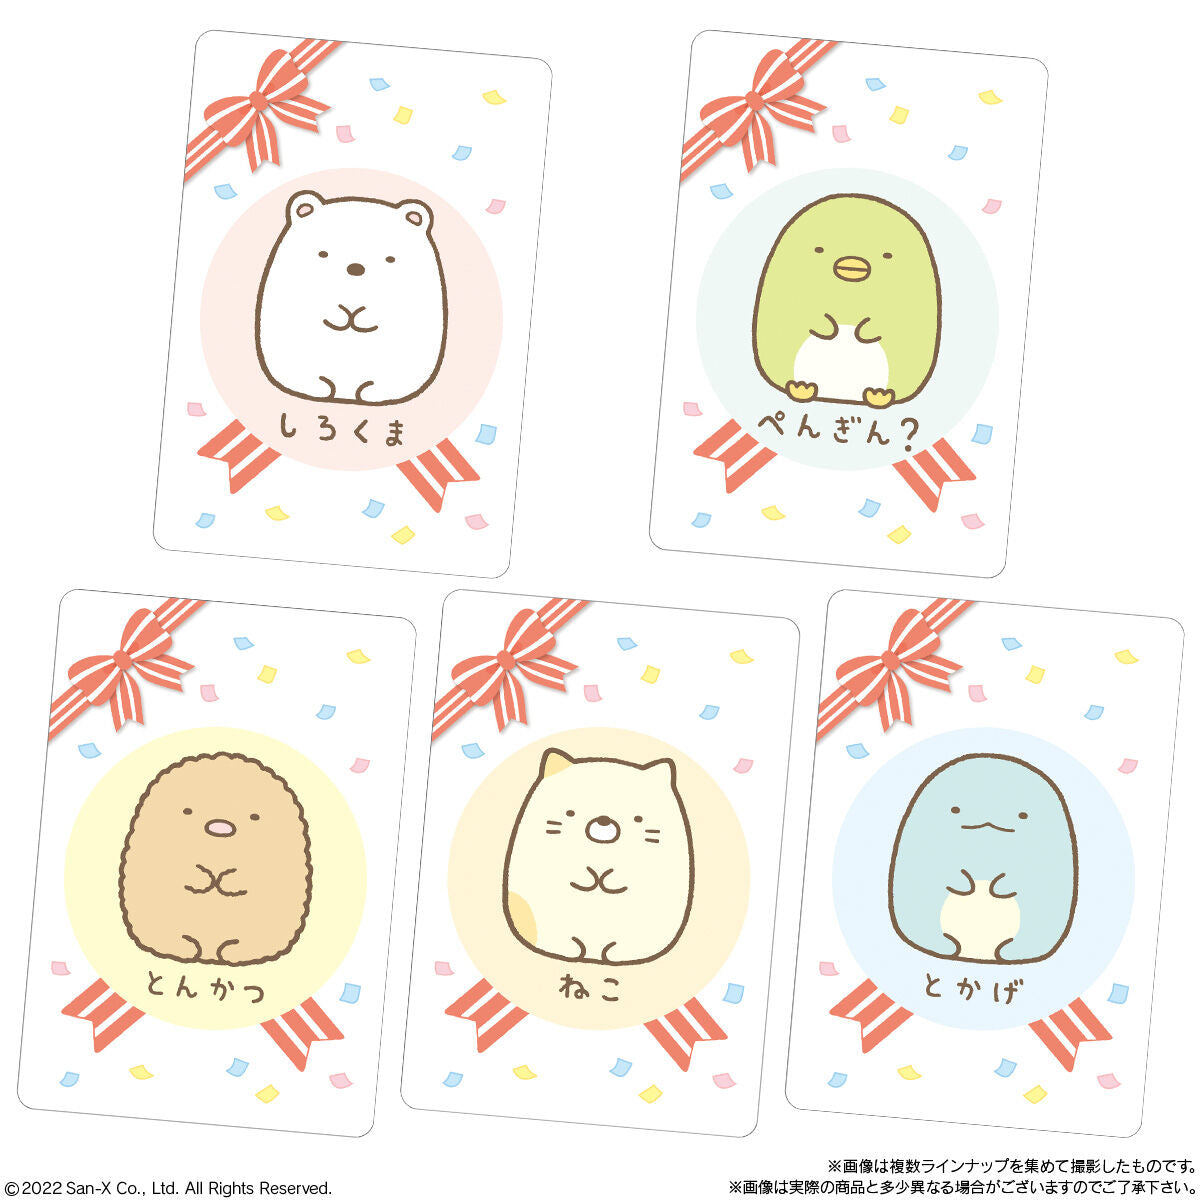 Sumikko Gurashi Collection Card Gummy 7-Single Pack (Random)-Bandai-Ace Cards &amp; Collectibles